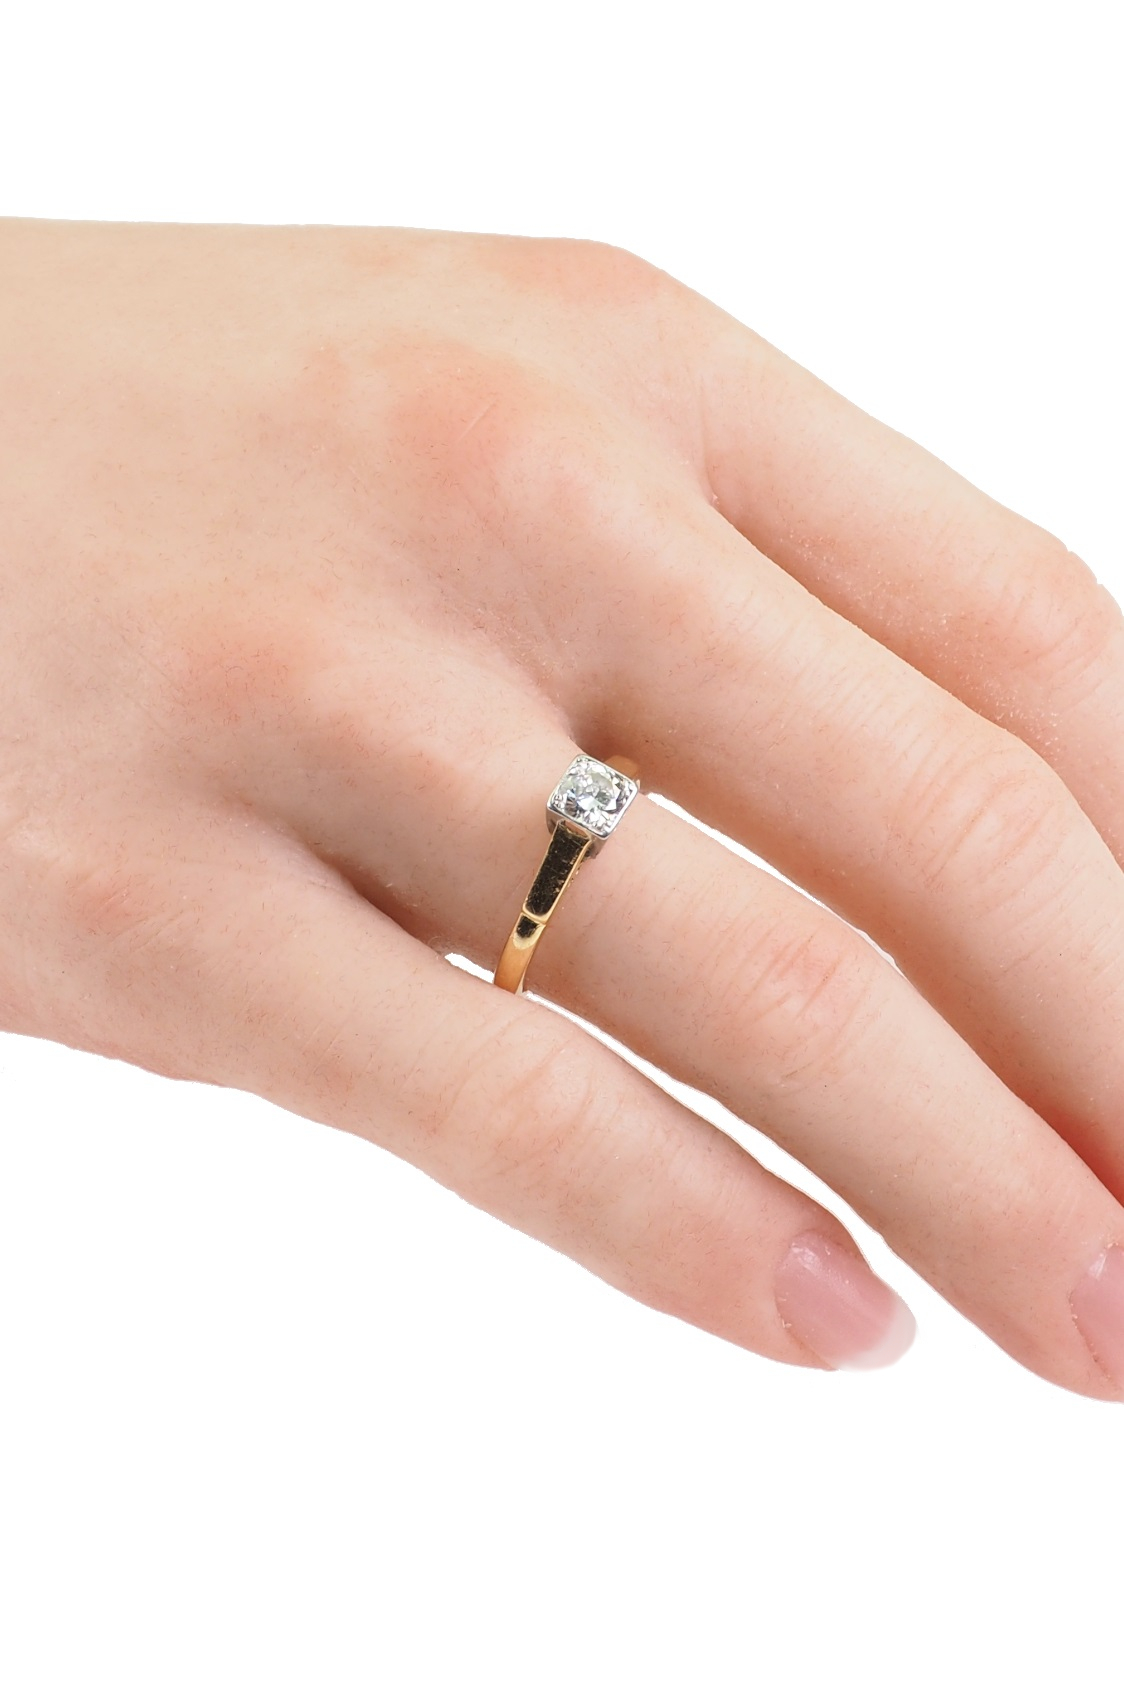 BELLA HALF CARAT DIAMOND ENGAGEMENT RING IN ROSE GOLD | Penwarden Fine  Jewellery